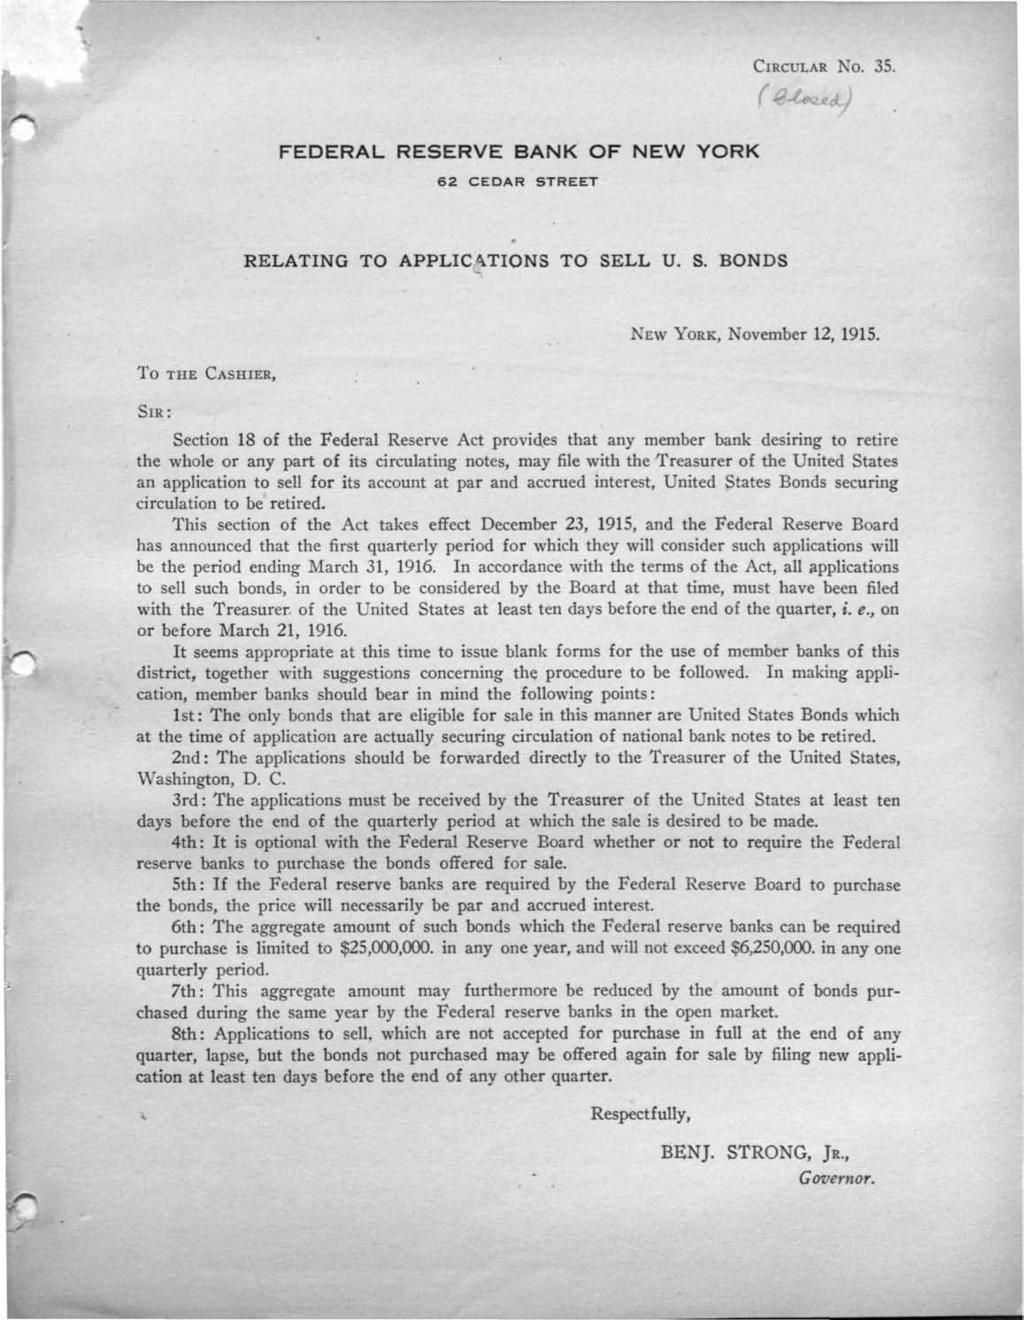 CIRCULAR NO. 35. FEDERAL RESERVE BANK OF NEW YORK 62 CEDAR STREET RELATING TO APPLICATIONS TO SELL U. S. BONDS NEW YORK, November 12, 1915.